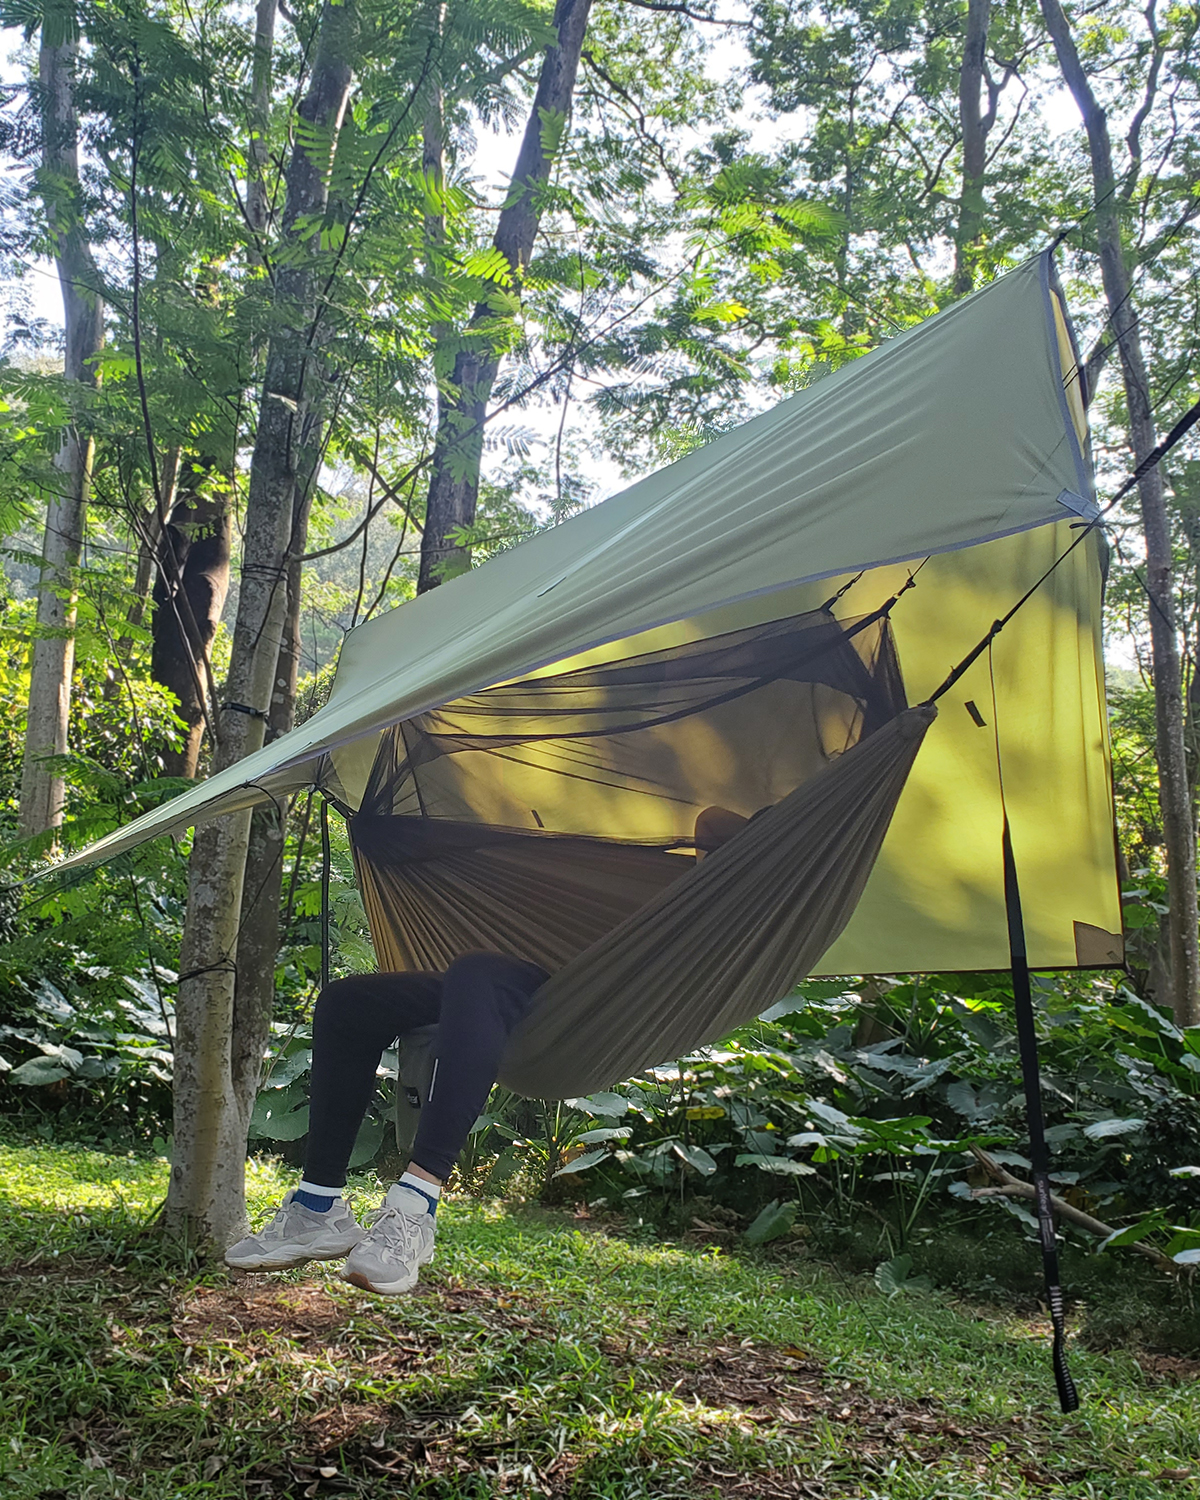 Sunyear Camping Hammock Is The Perfect Outdoor Sleeping